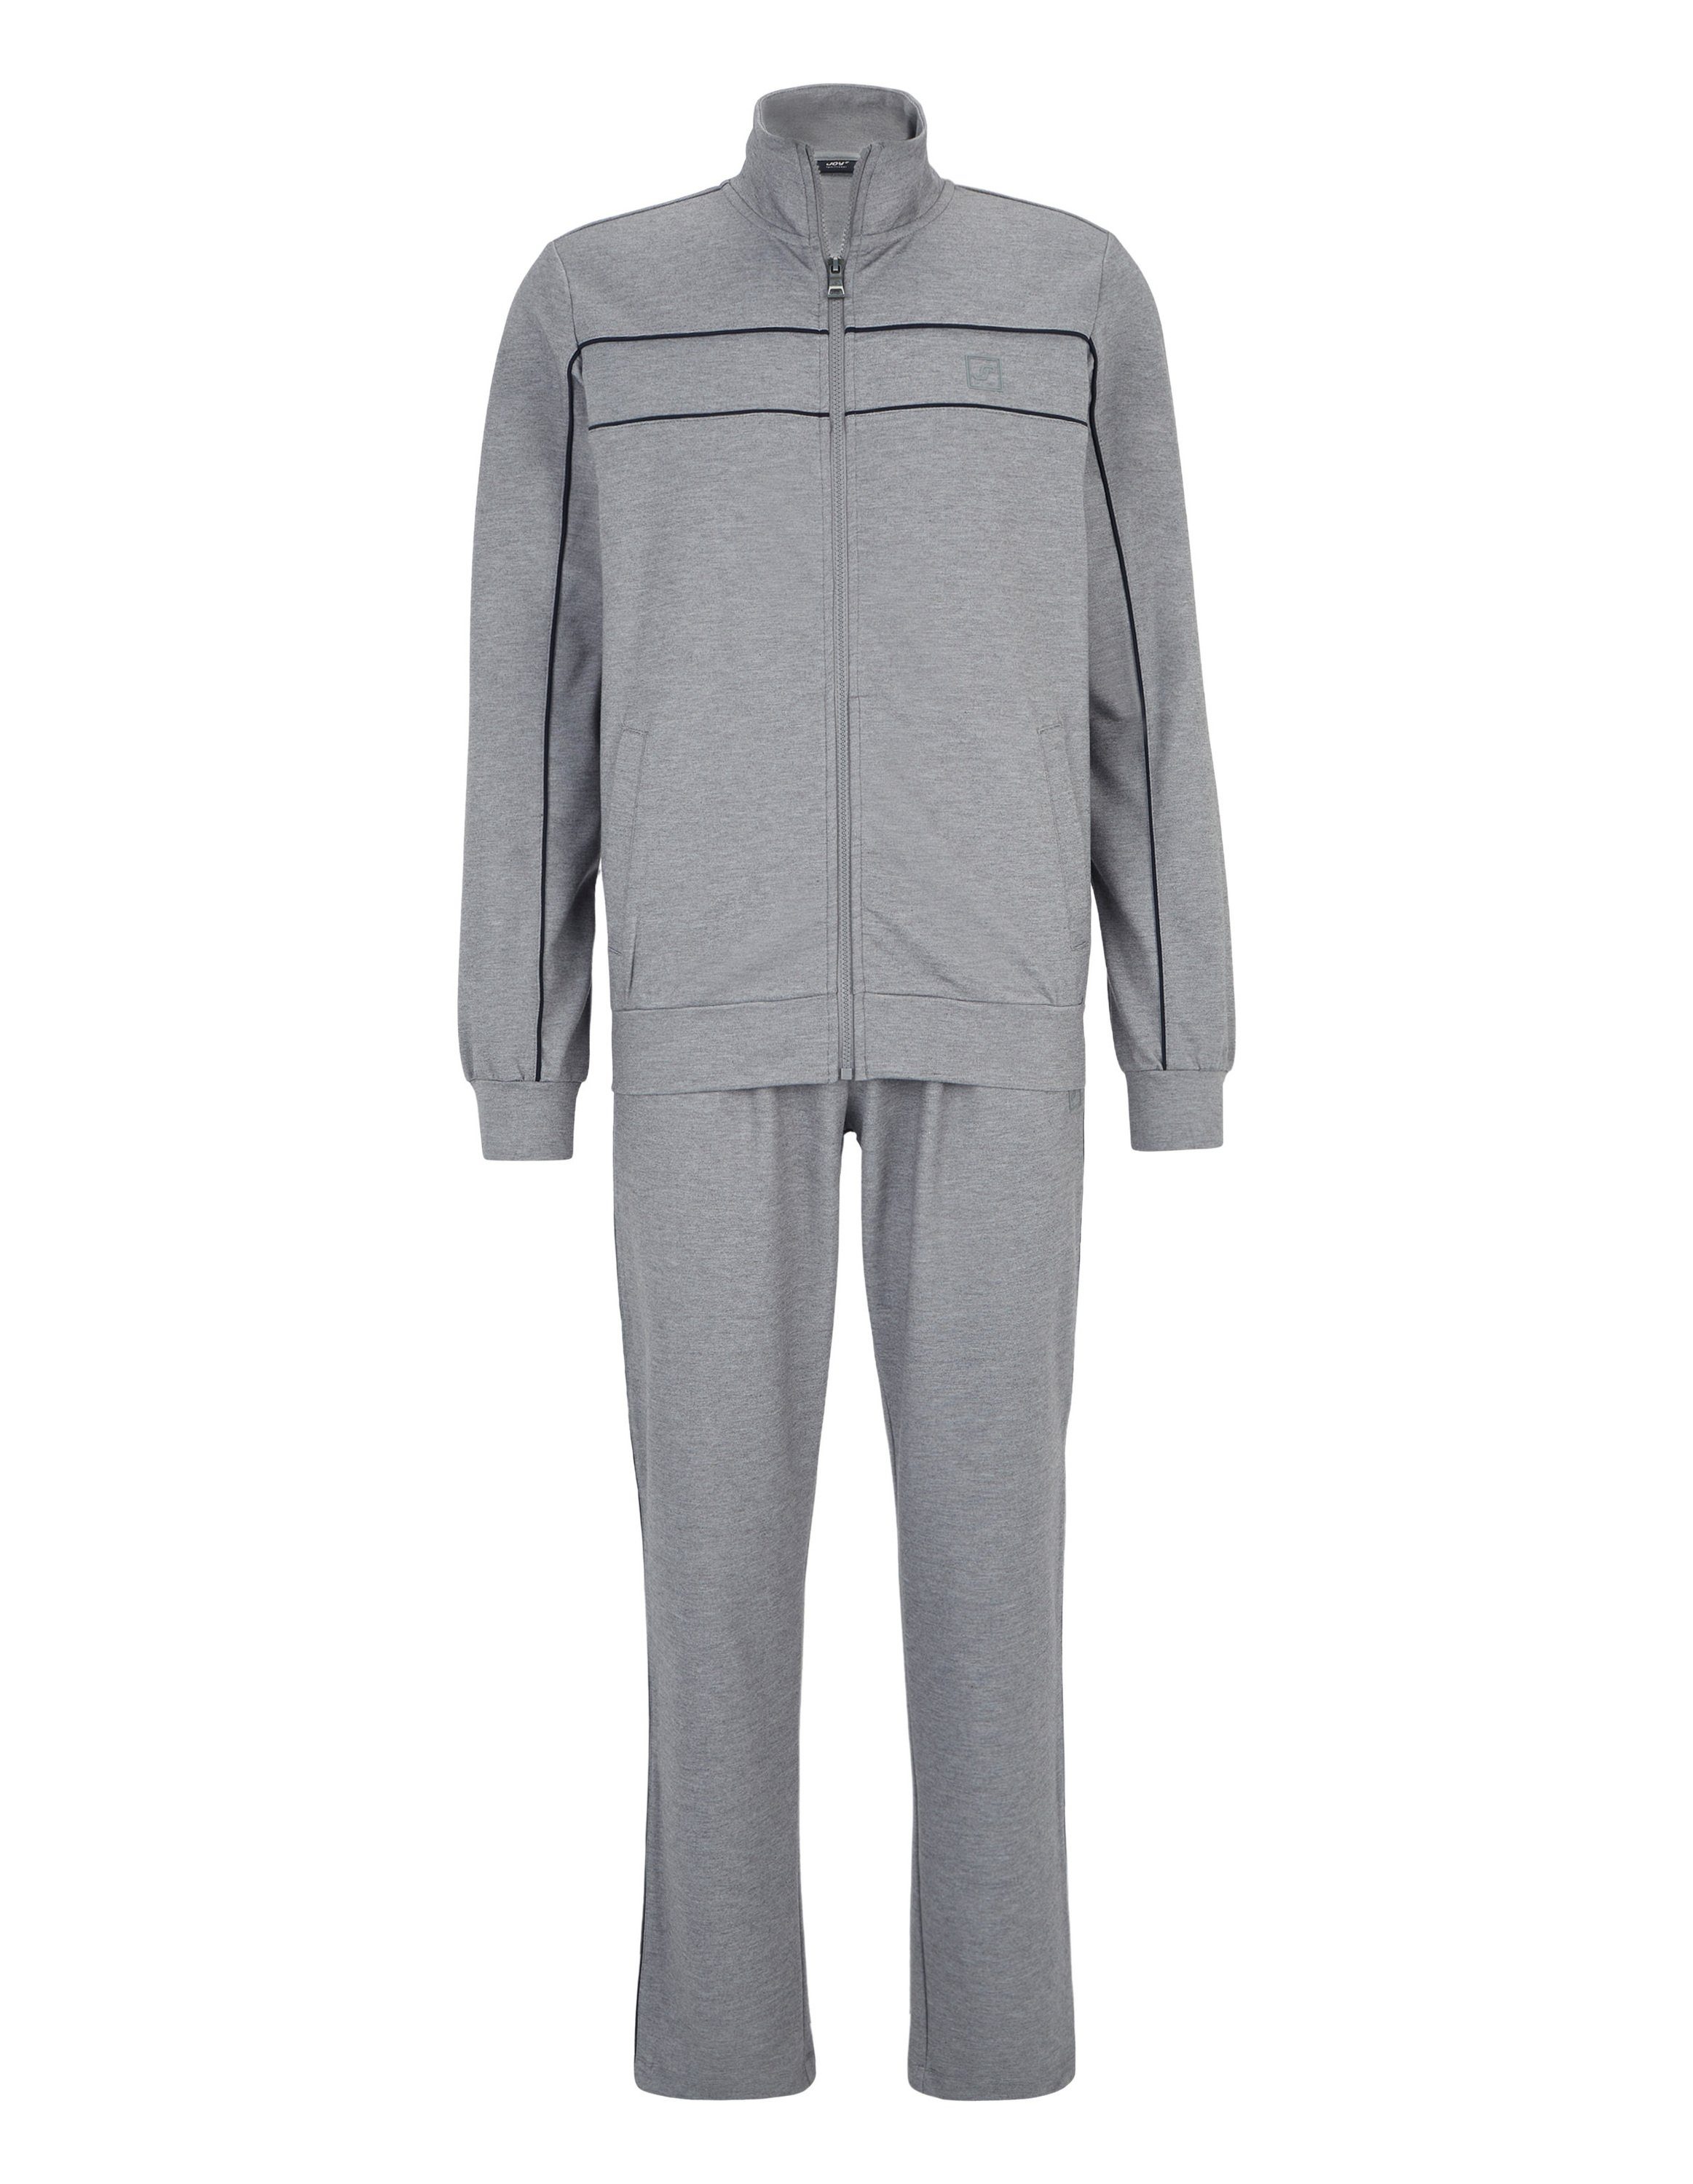 FUN Sportswear & titan melange Jogginganzug JOY COLLIN Joy Anzug